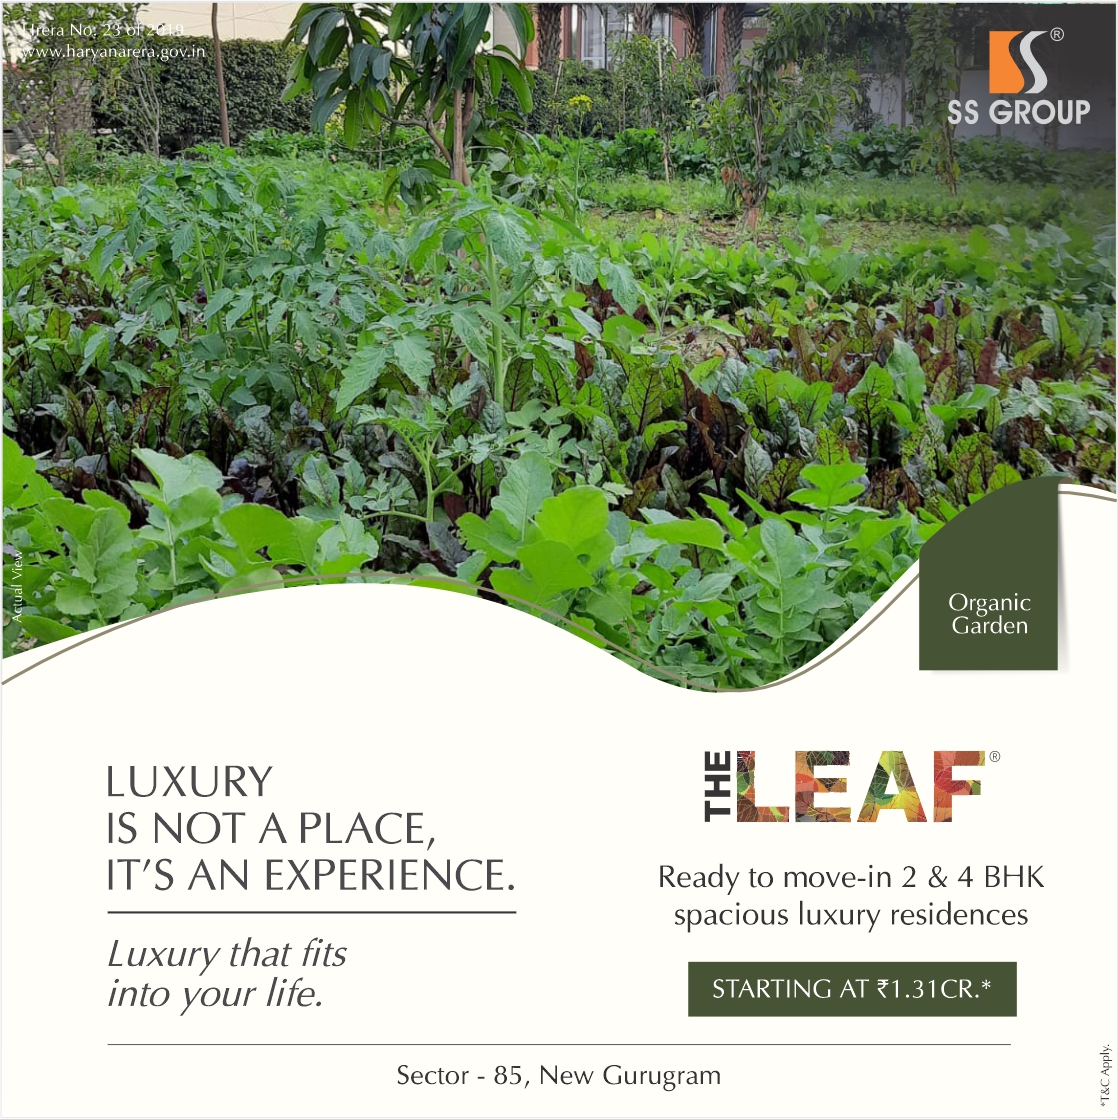 The organic garden at SS The Leaf, Dwarka Expressway, Gurgaon Update